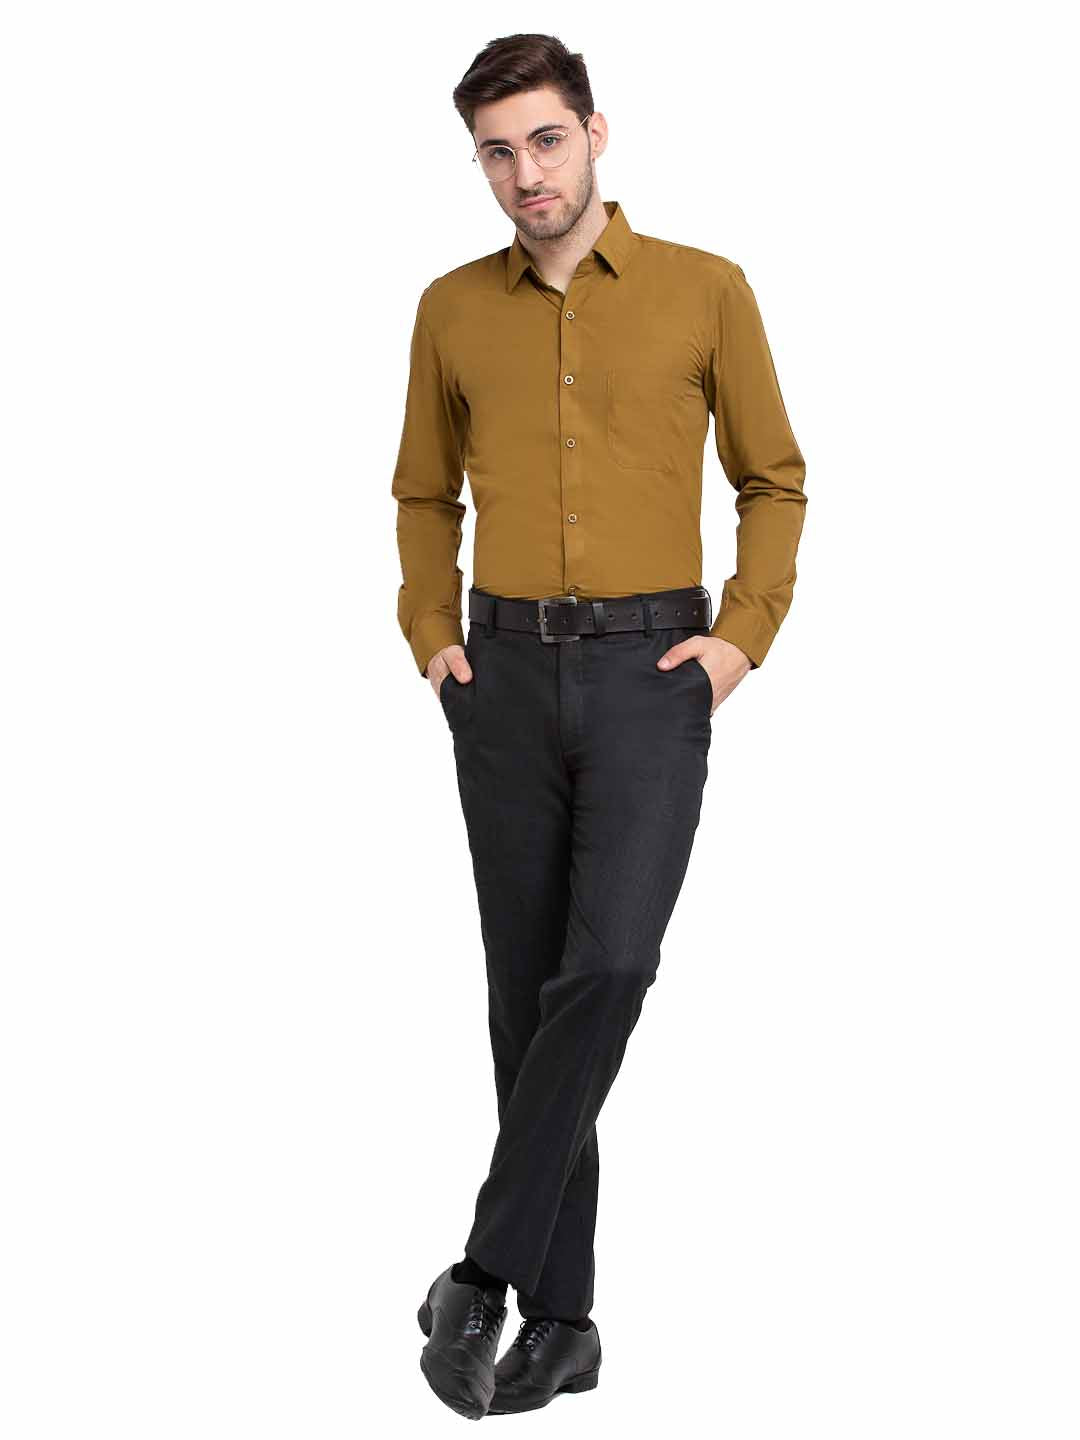 Jainish Men's Cotton Solid Mustard Formal Shirt's